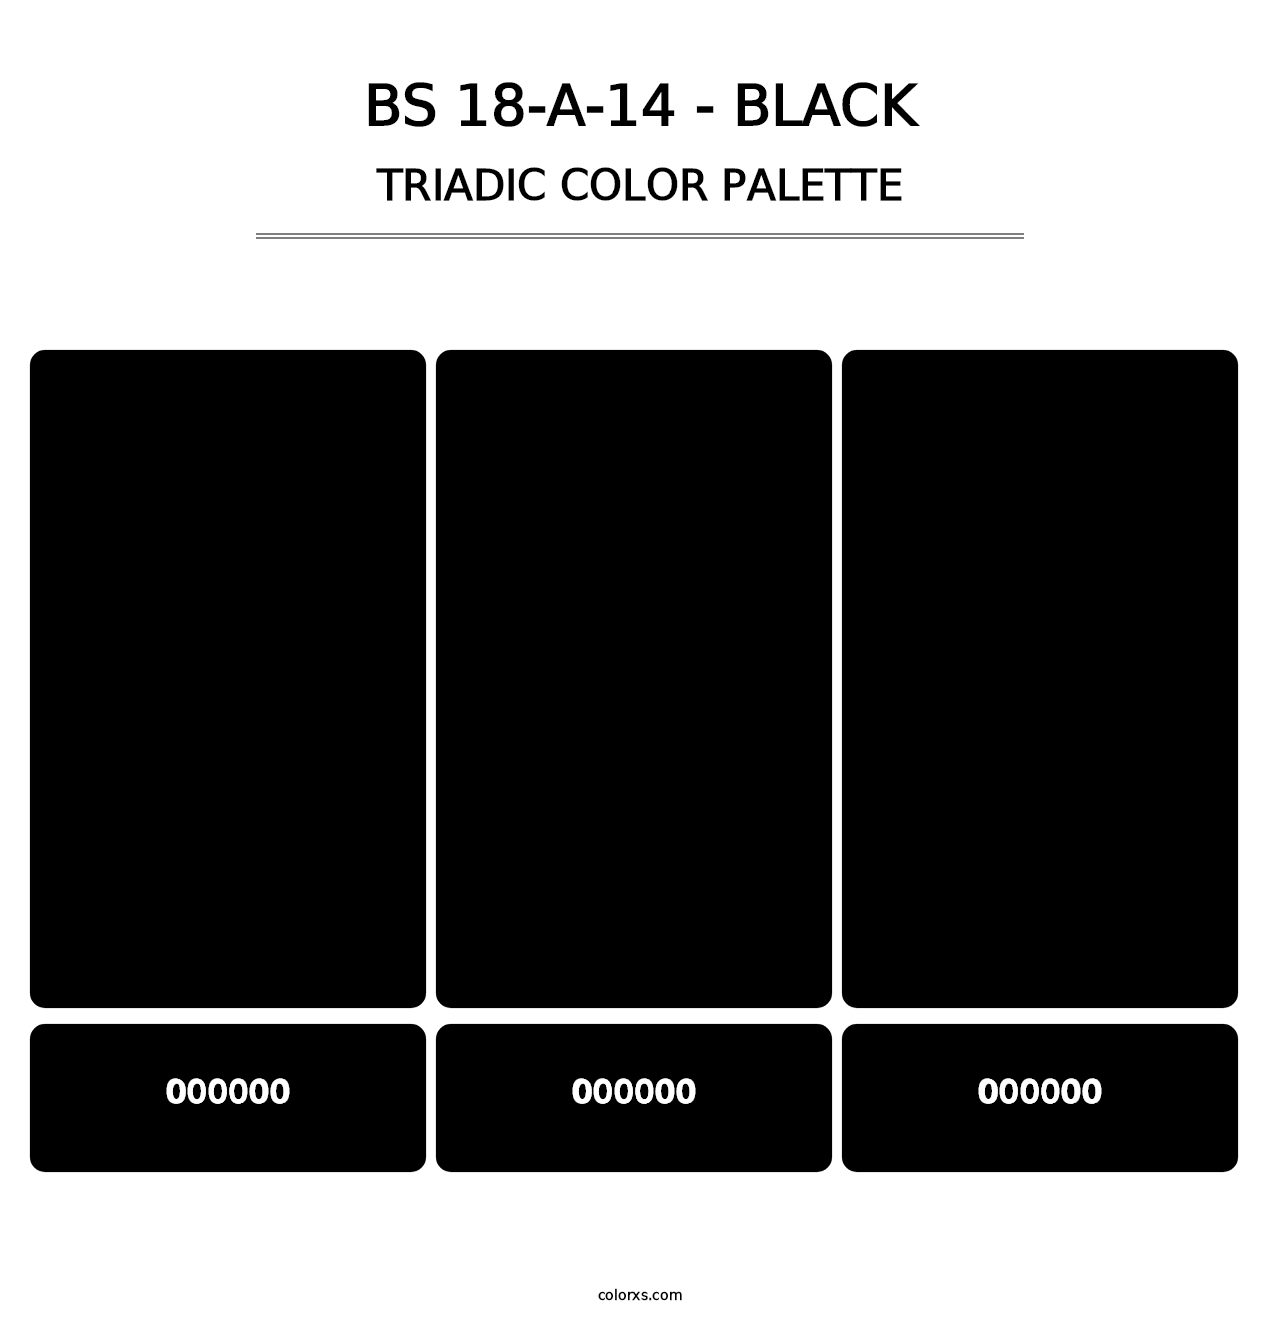 BS 18-A-14 - Black - Triadic Color Palette